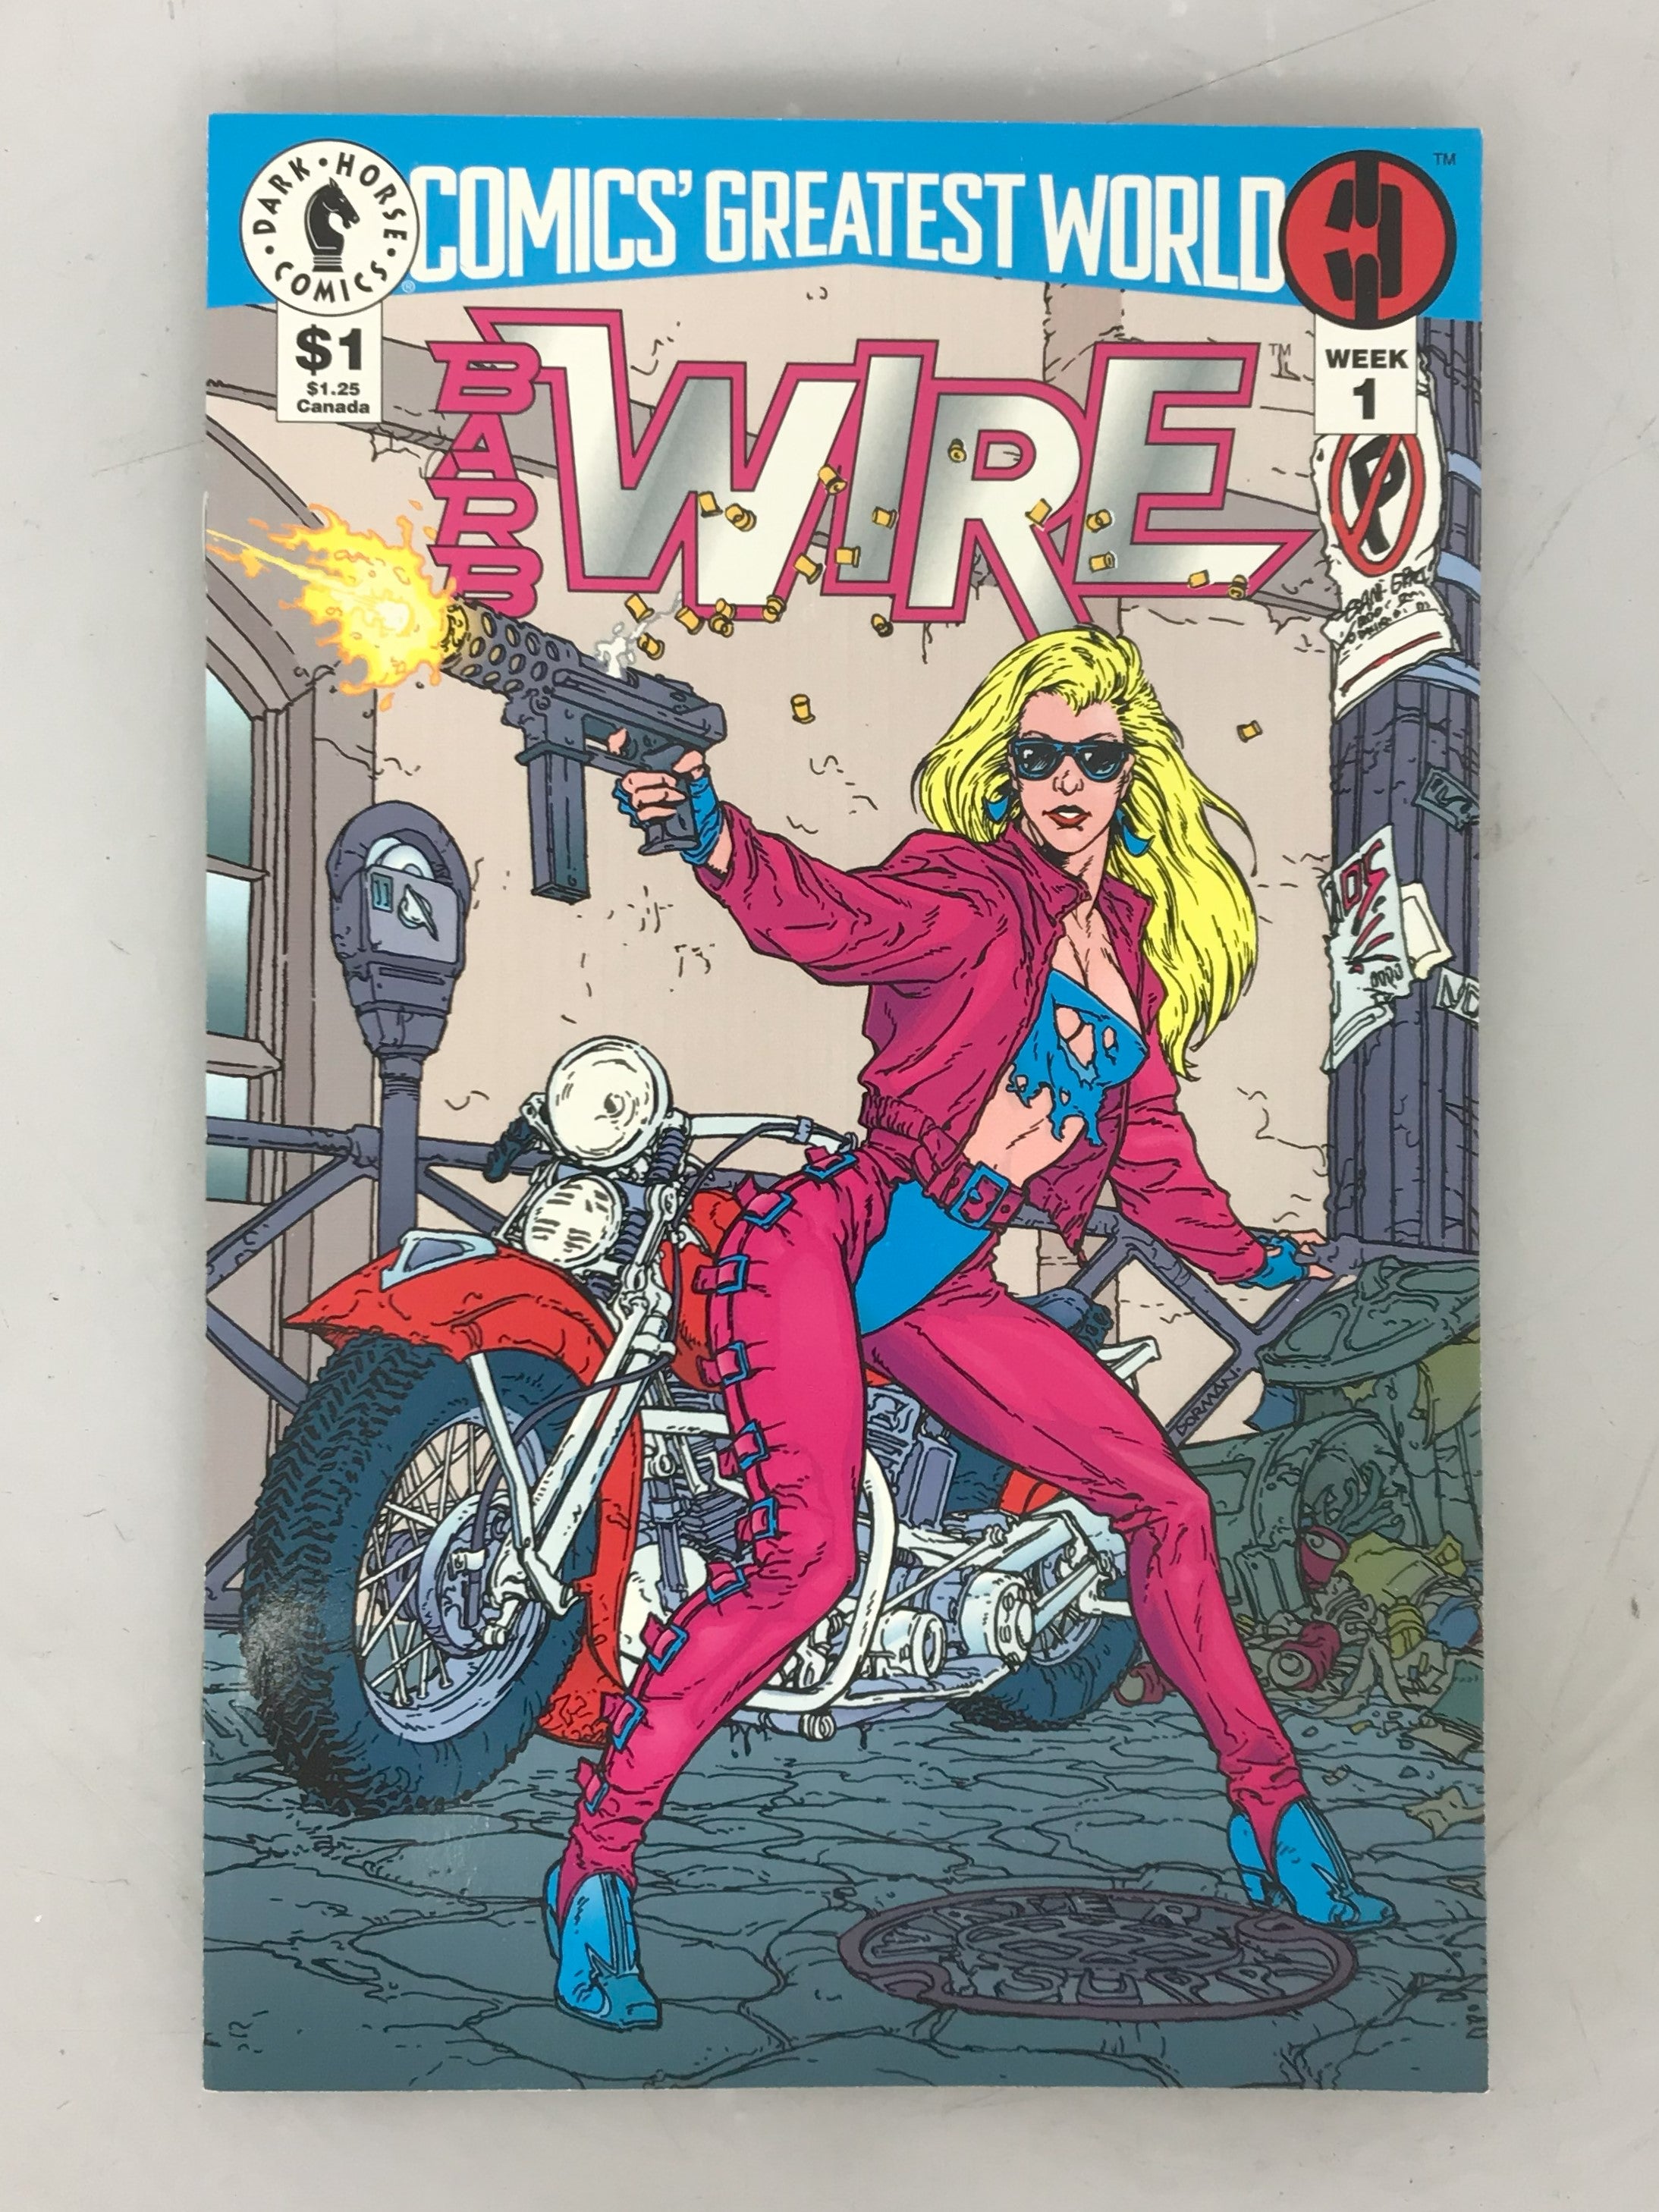 Comics' Greatest World: Barb Wire 1 1993